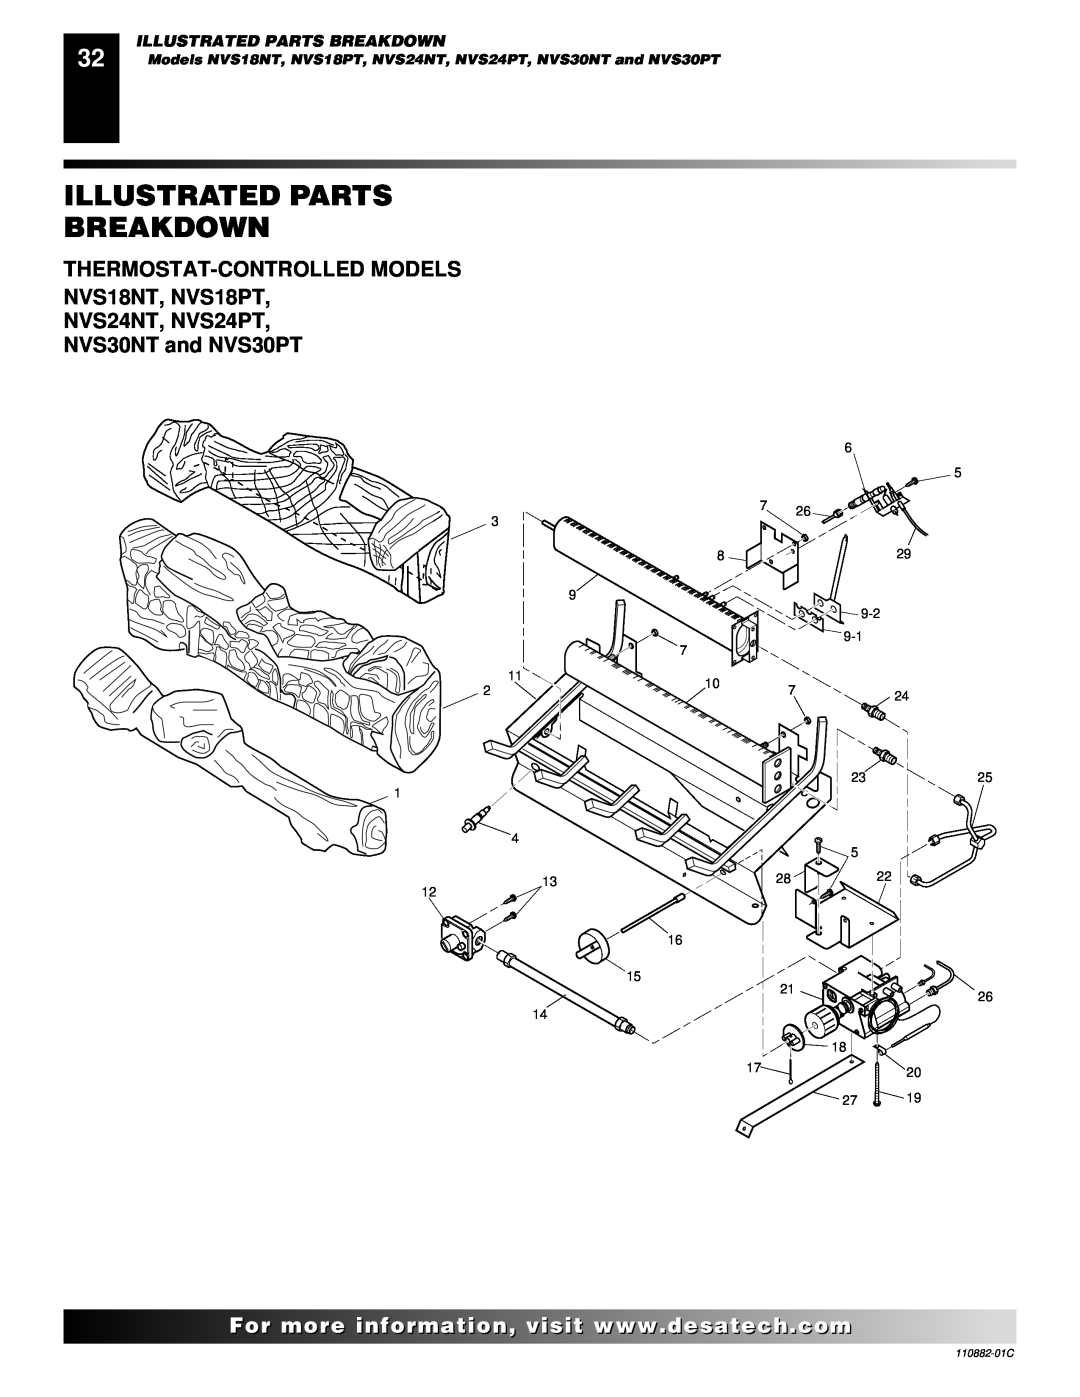 Desa Illustrated Parts Breakdown, THERMOSTAT-CONTROLLEDMODELS NVS18NT, NVS18PT, NVS24NT, NVS24PT, NVS30NT and NVS30PT 